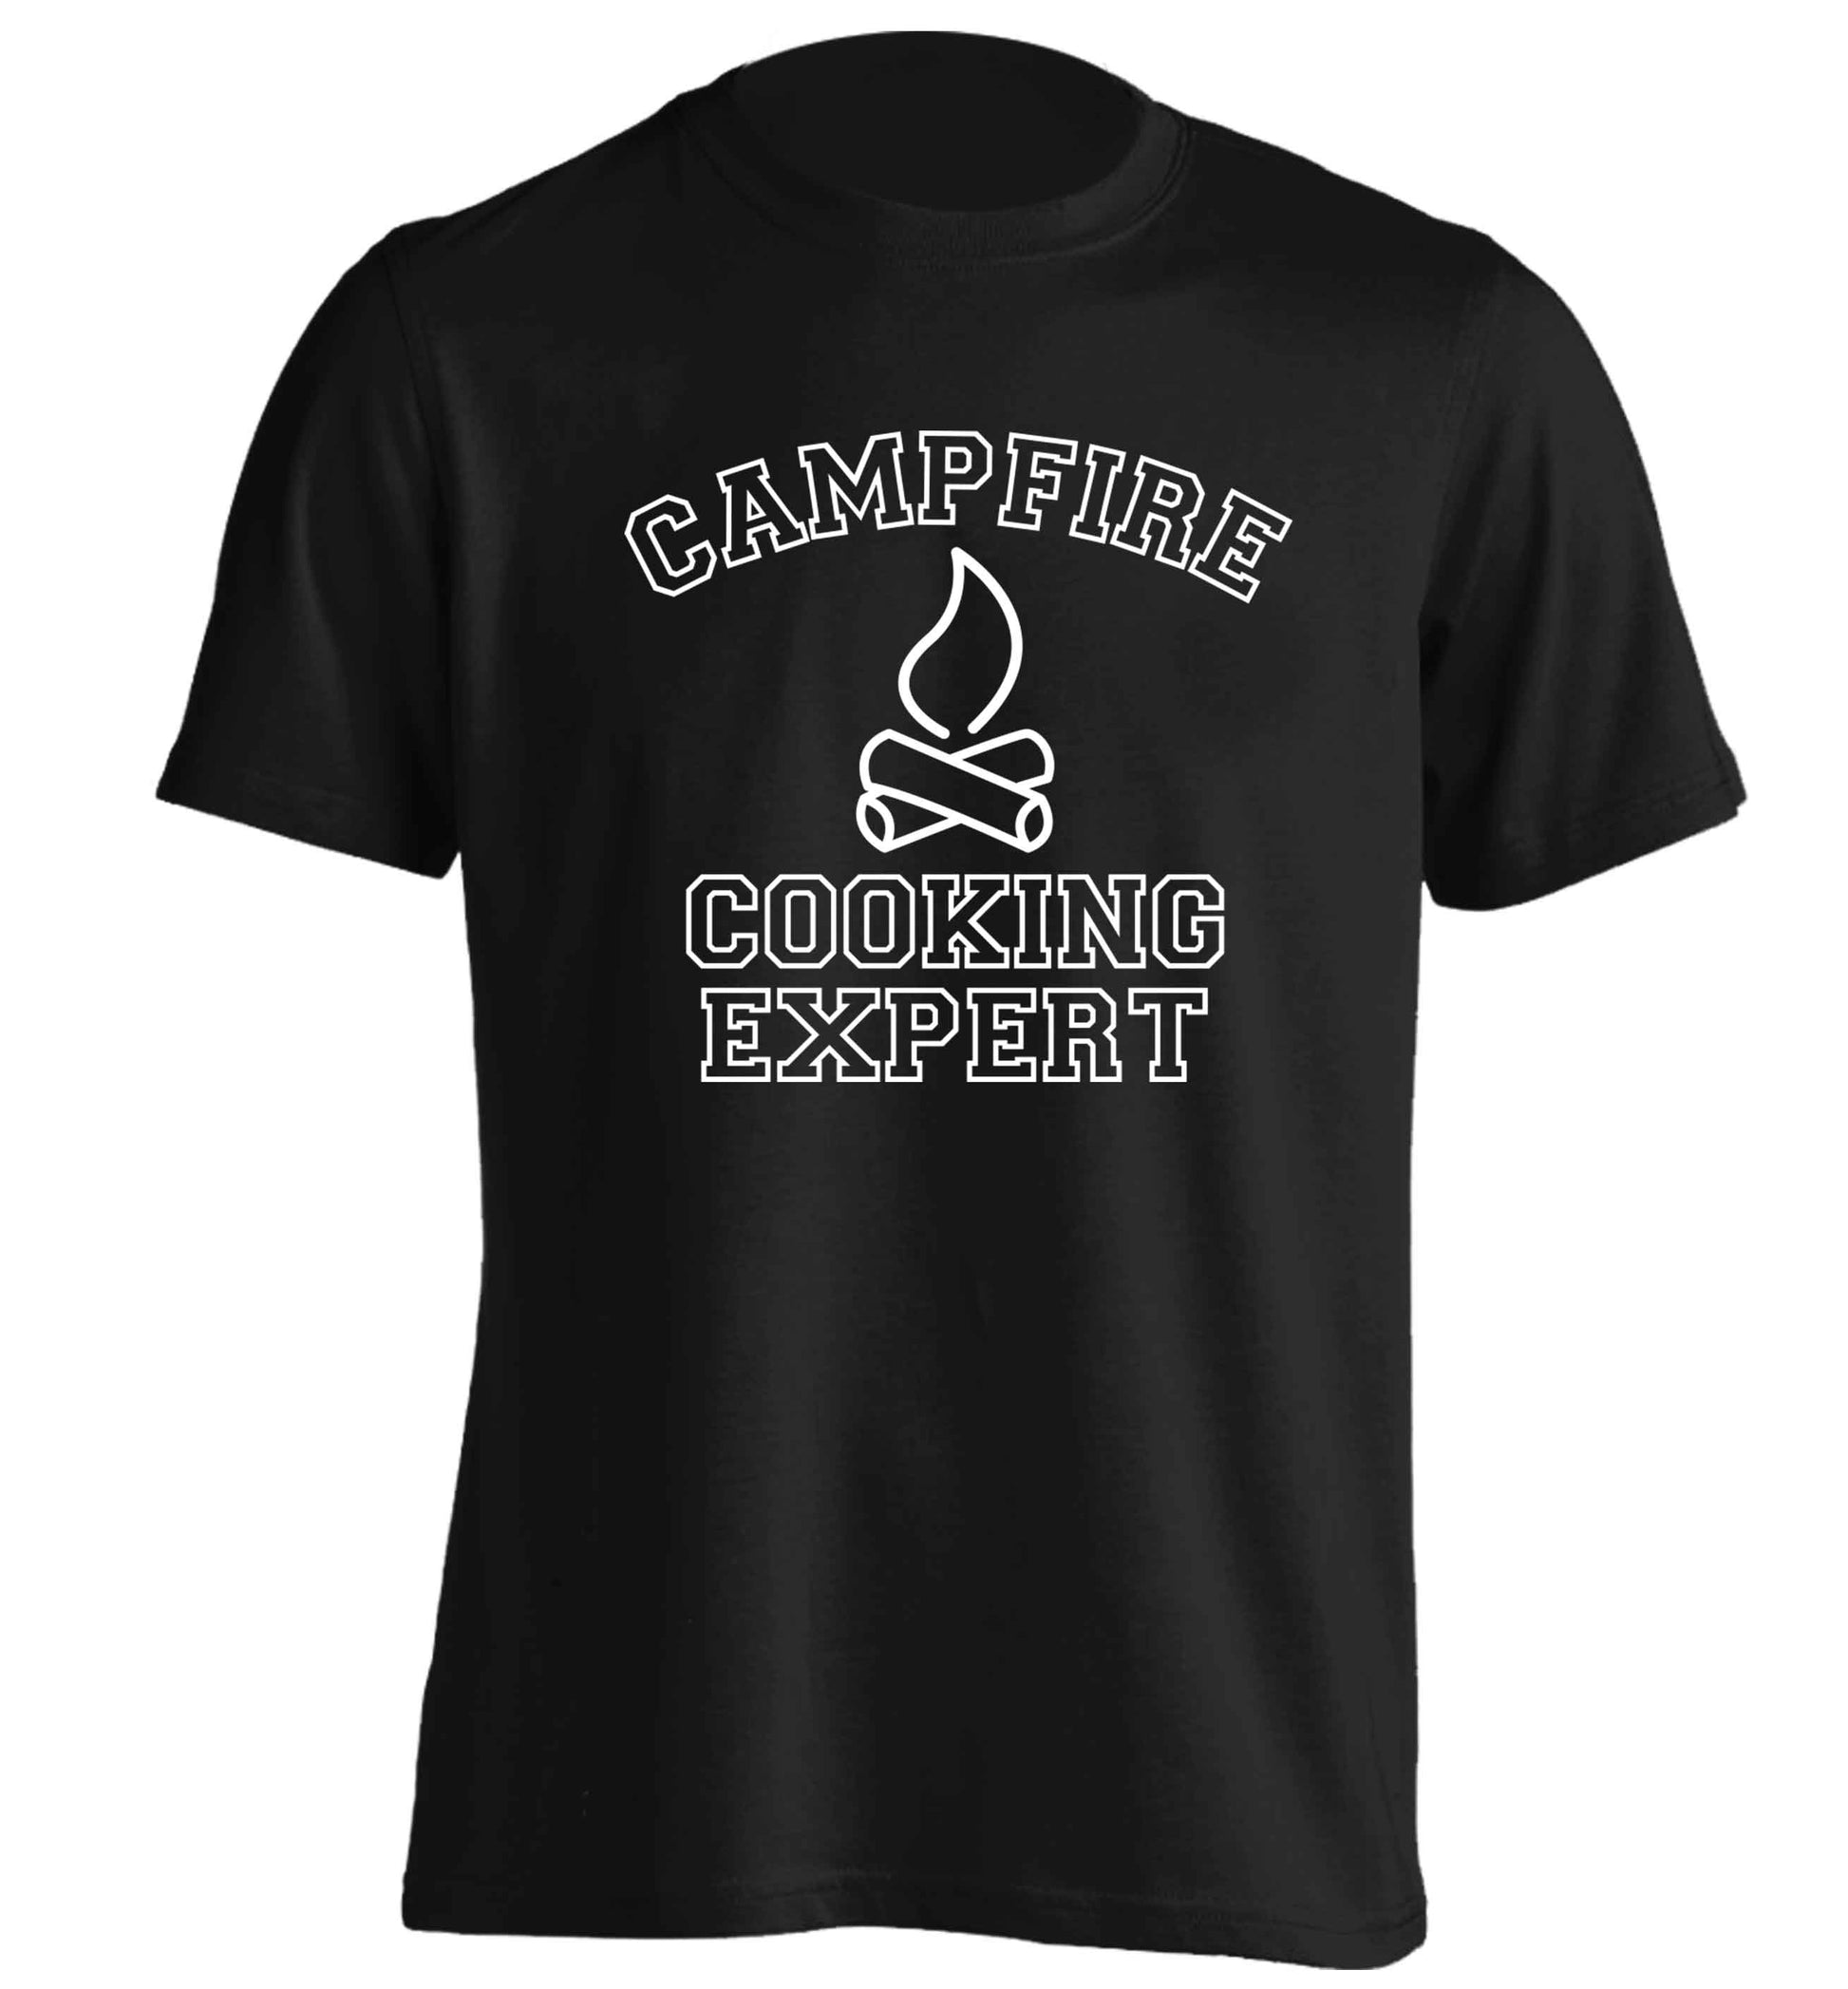 Campfire cooking expert adults unisex black Tshirt 2XL